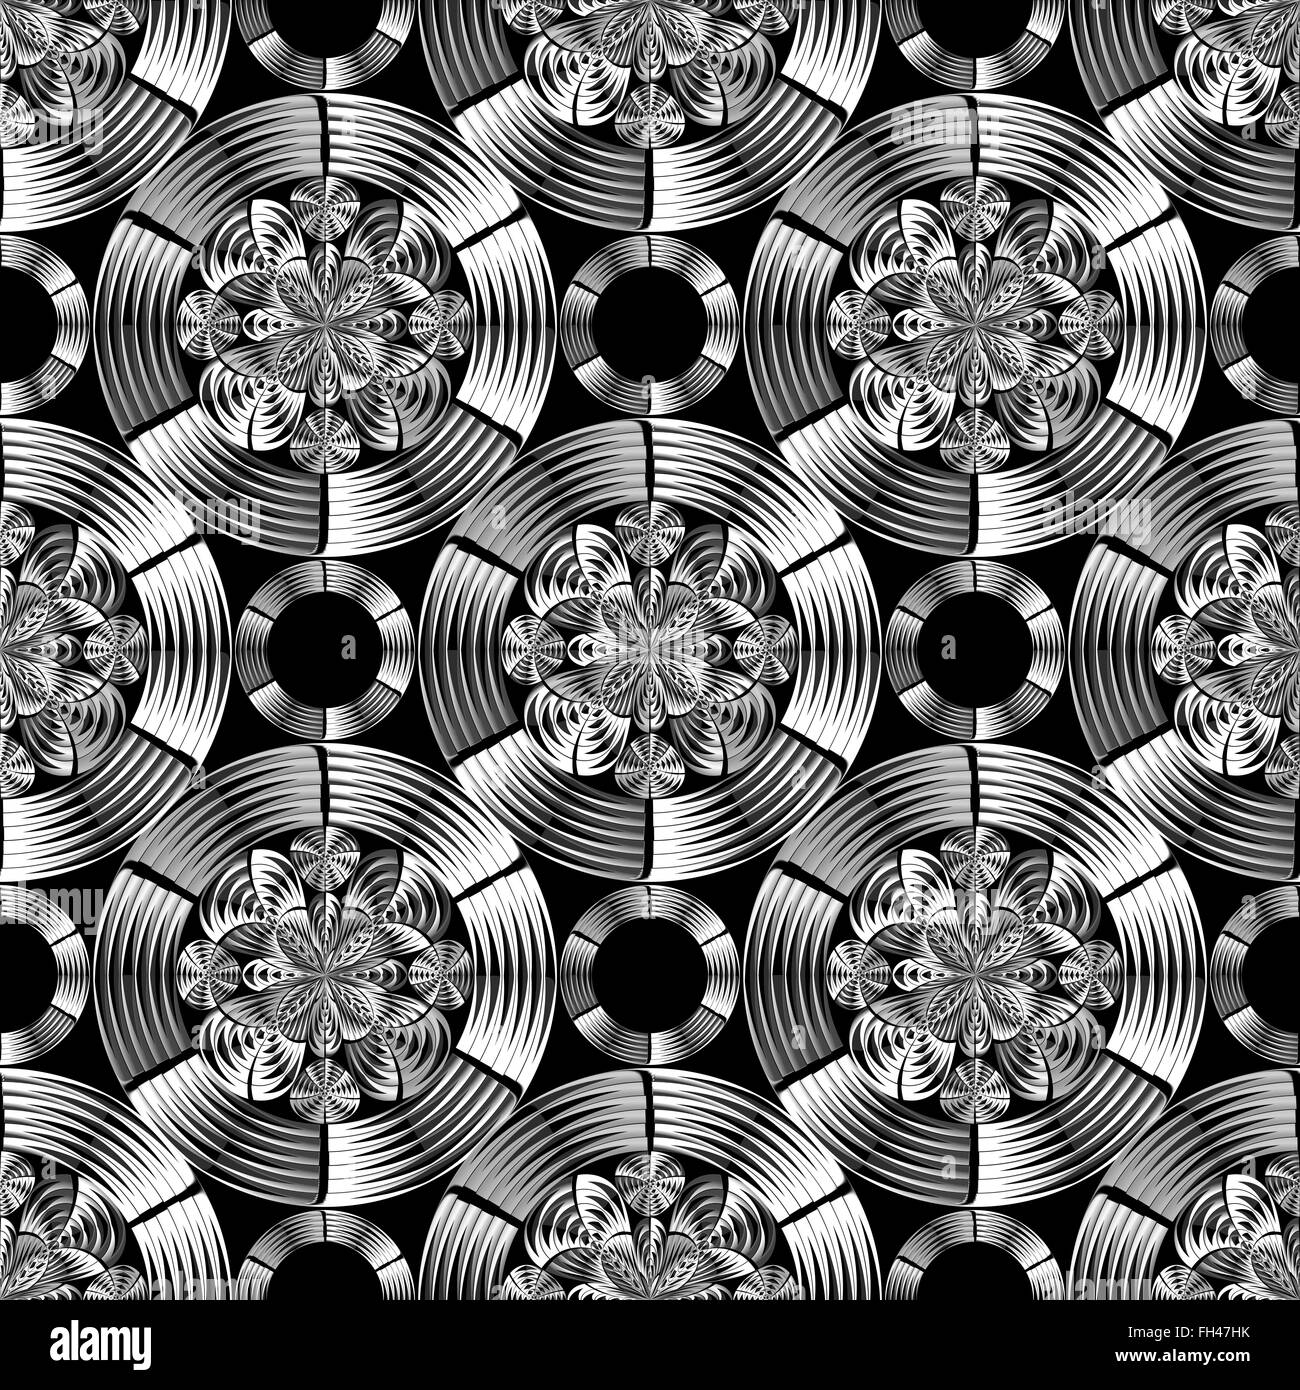 Shiny metallic damask geometric pattern in black and white. Digital art. Stock Photo